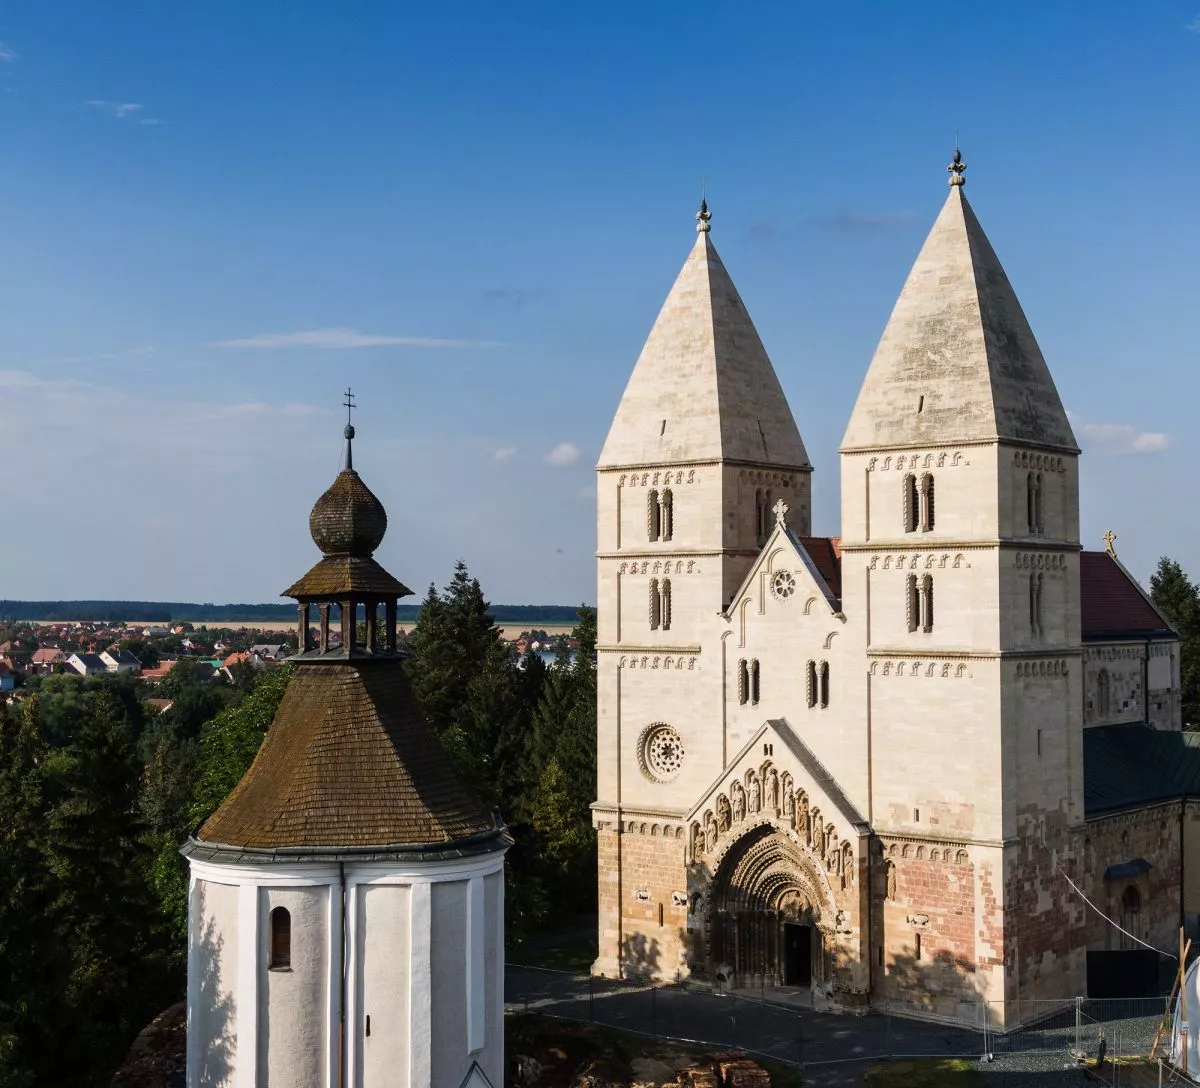 Bájos magyar falvak a határ mentén - Jáki templom